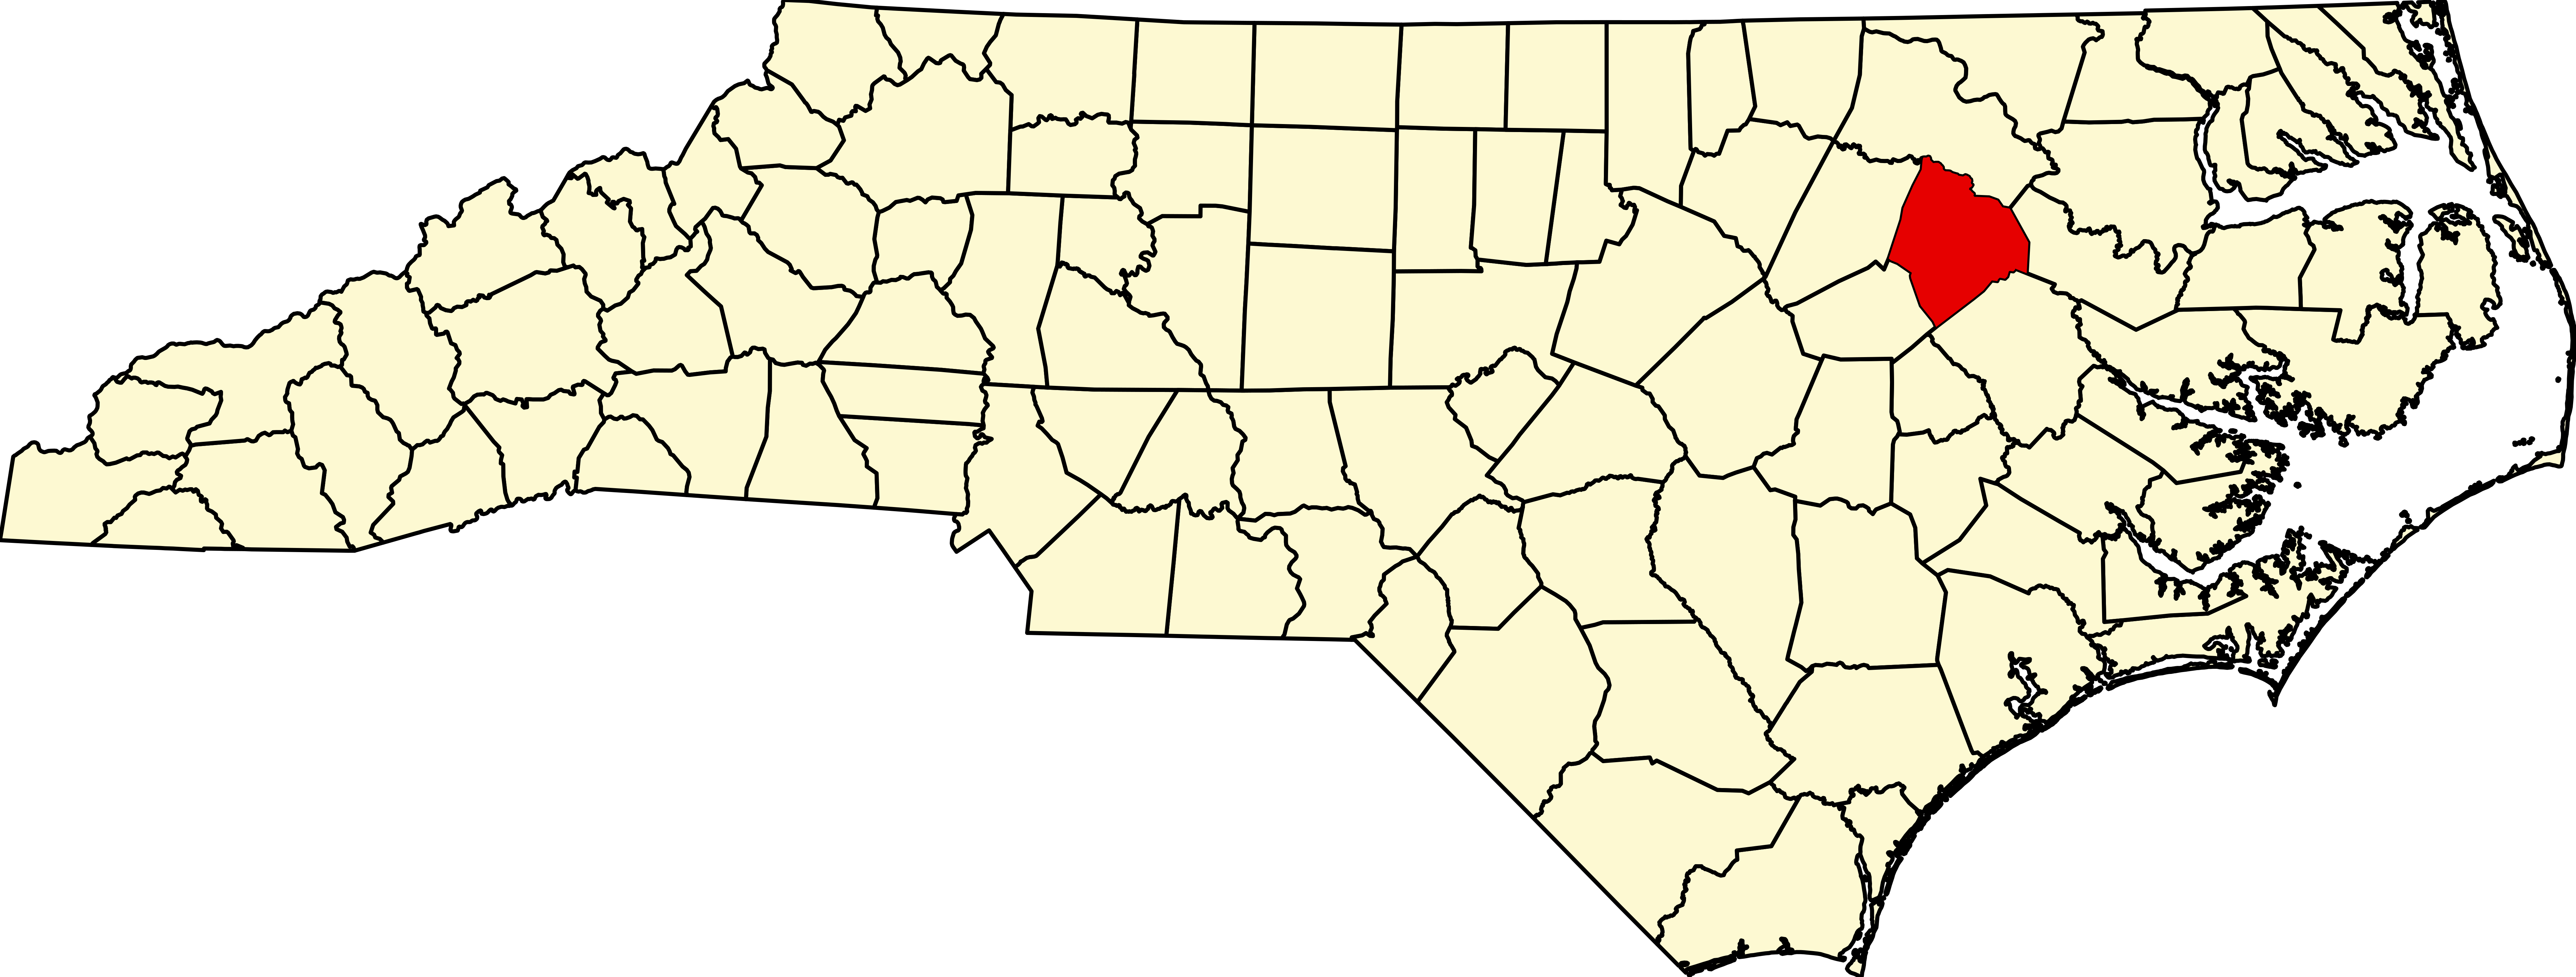 upload.wikimedia.org/wikipedia/commons/thumb/7/7a/Map_of_North_Carolina_highlighting_Edgecombe_County.svg/8061px-Map_of_North_Carolina_highlighting_Edgecombe_County.svg.png